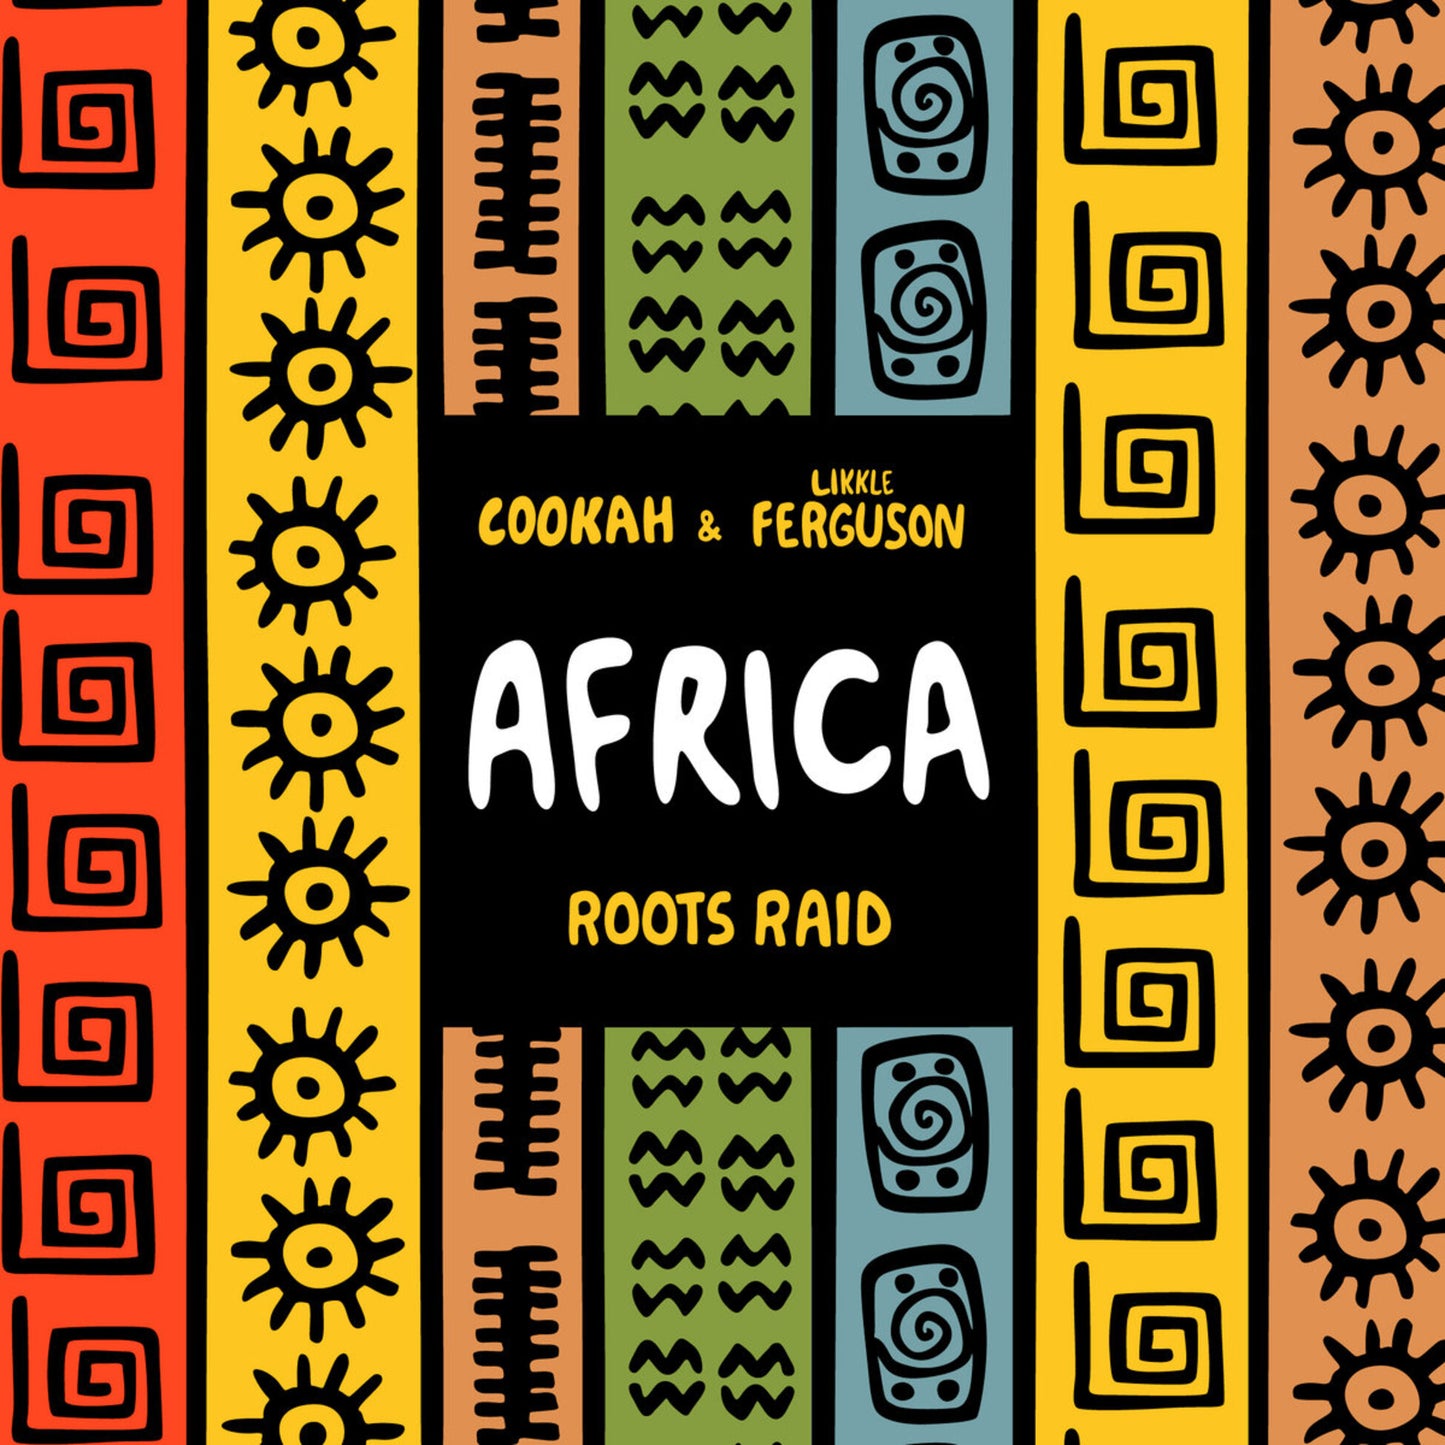 Roots Raid meets Cookah & Likkle Ferguson - Africa